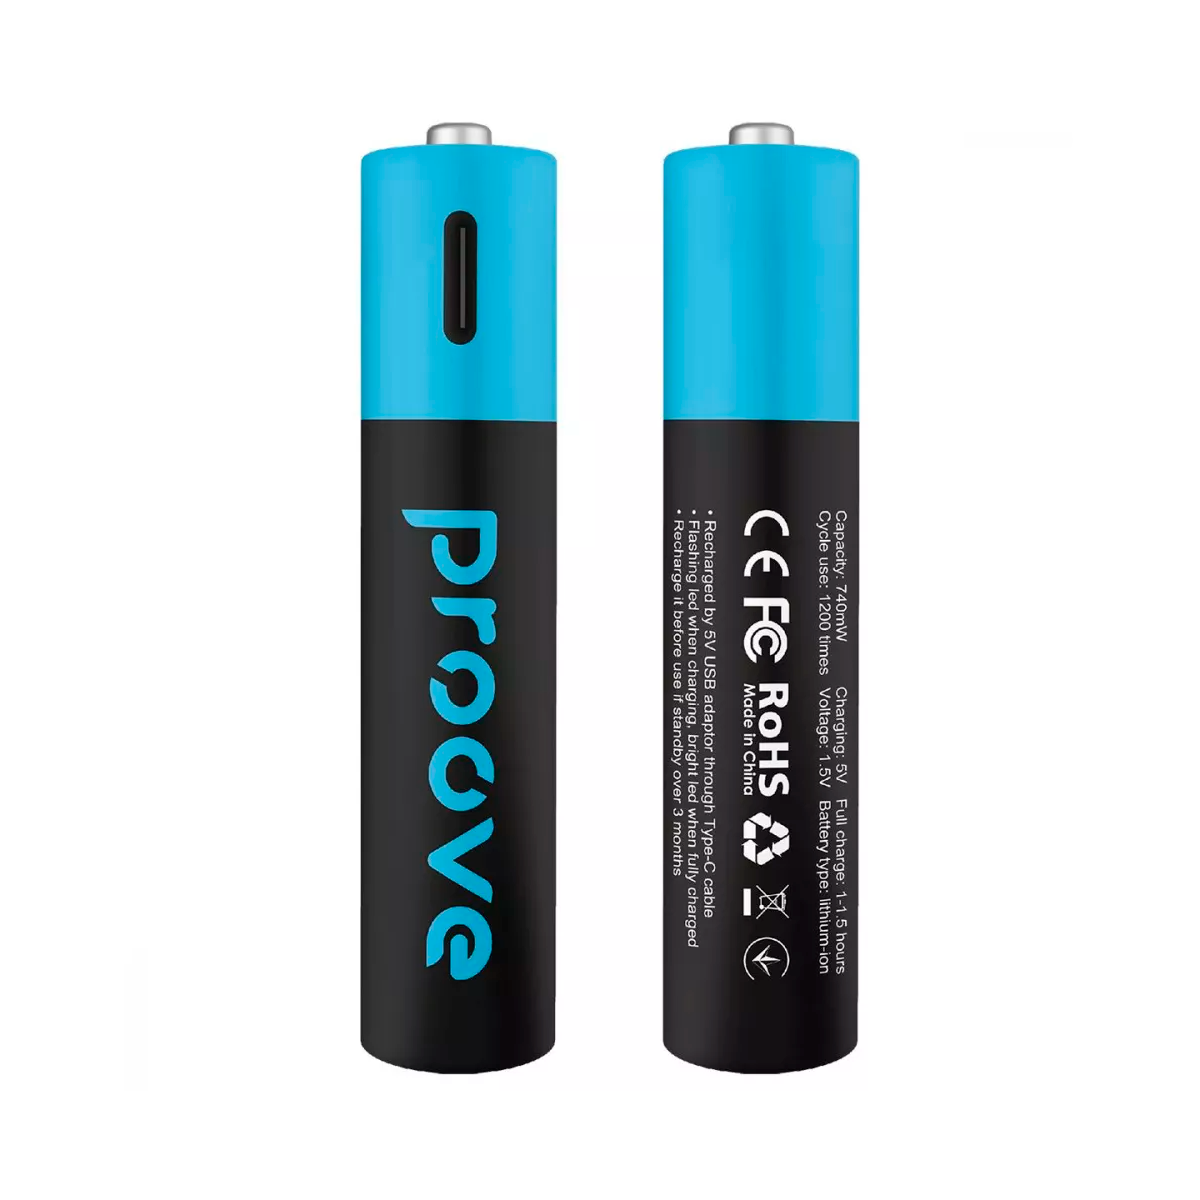 Аккумуляторные батарейки Proove Type-C Compact Energy 750mAh AAA 2pack Black (RBCE75010008)